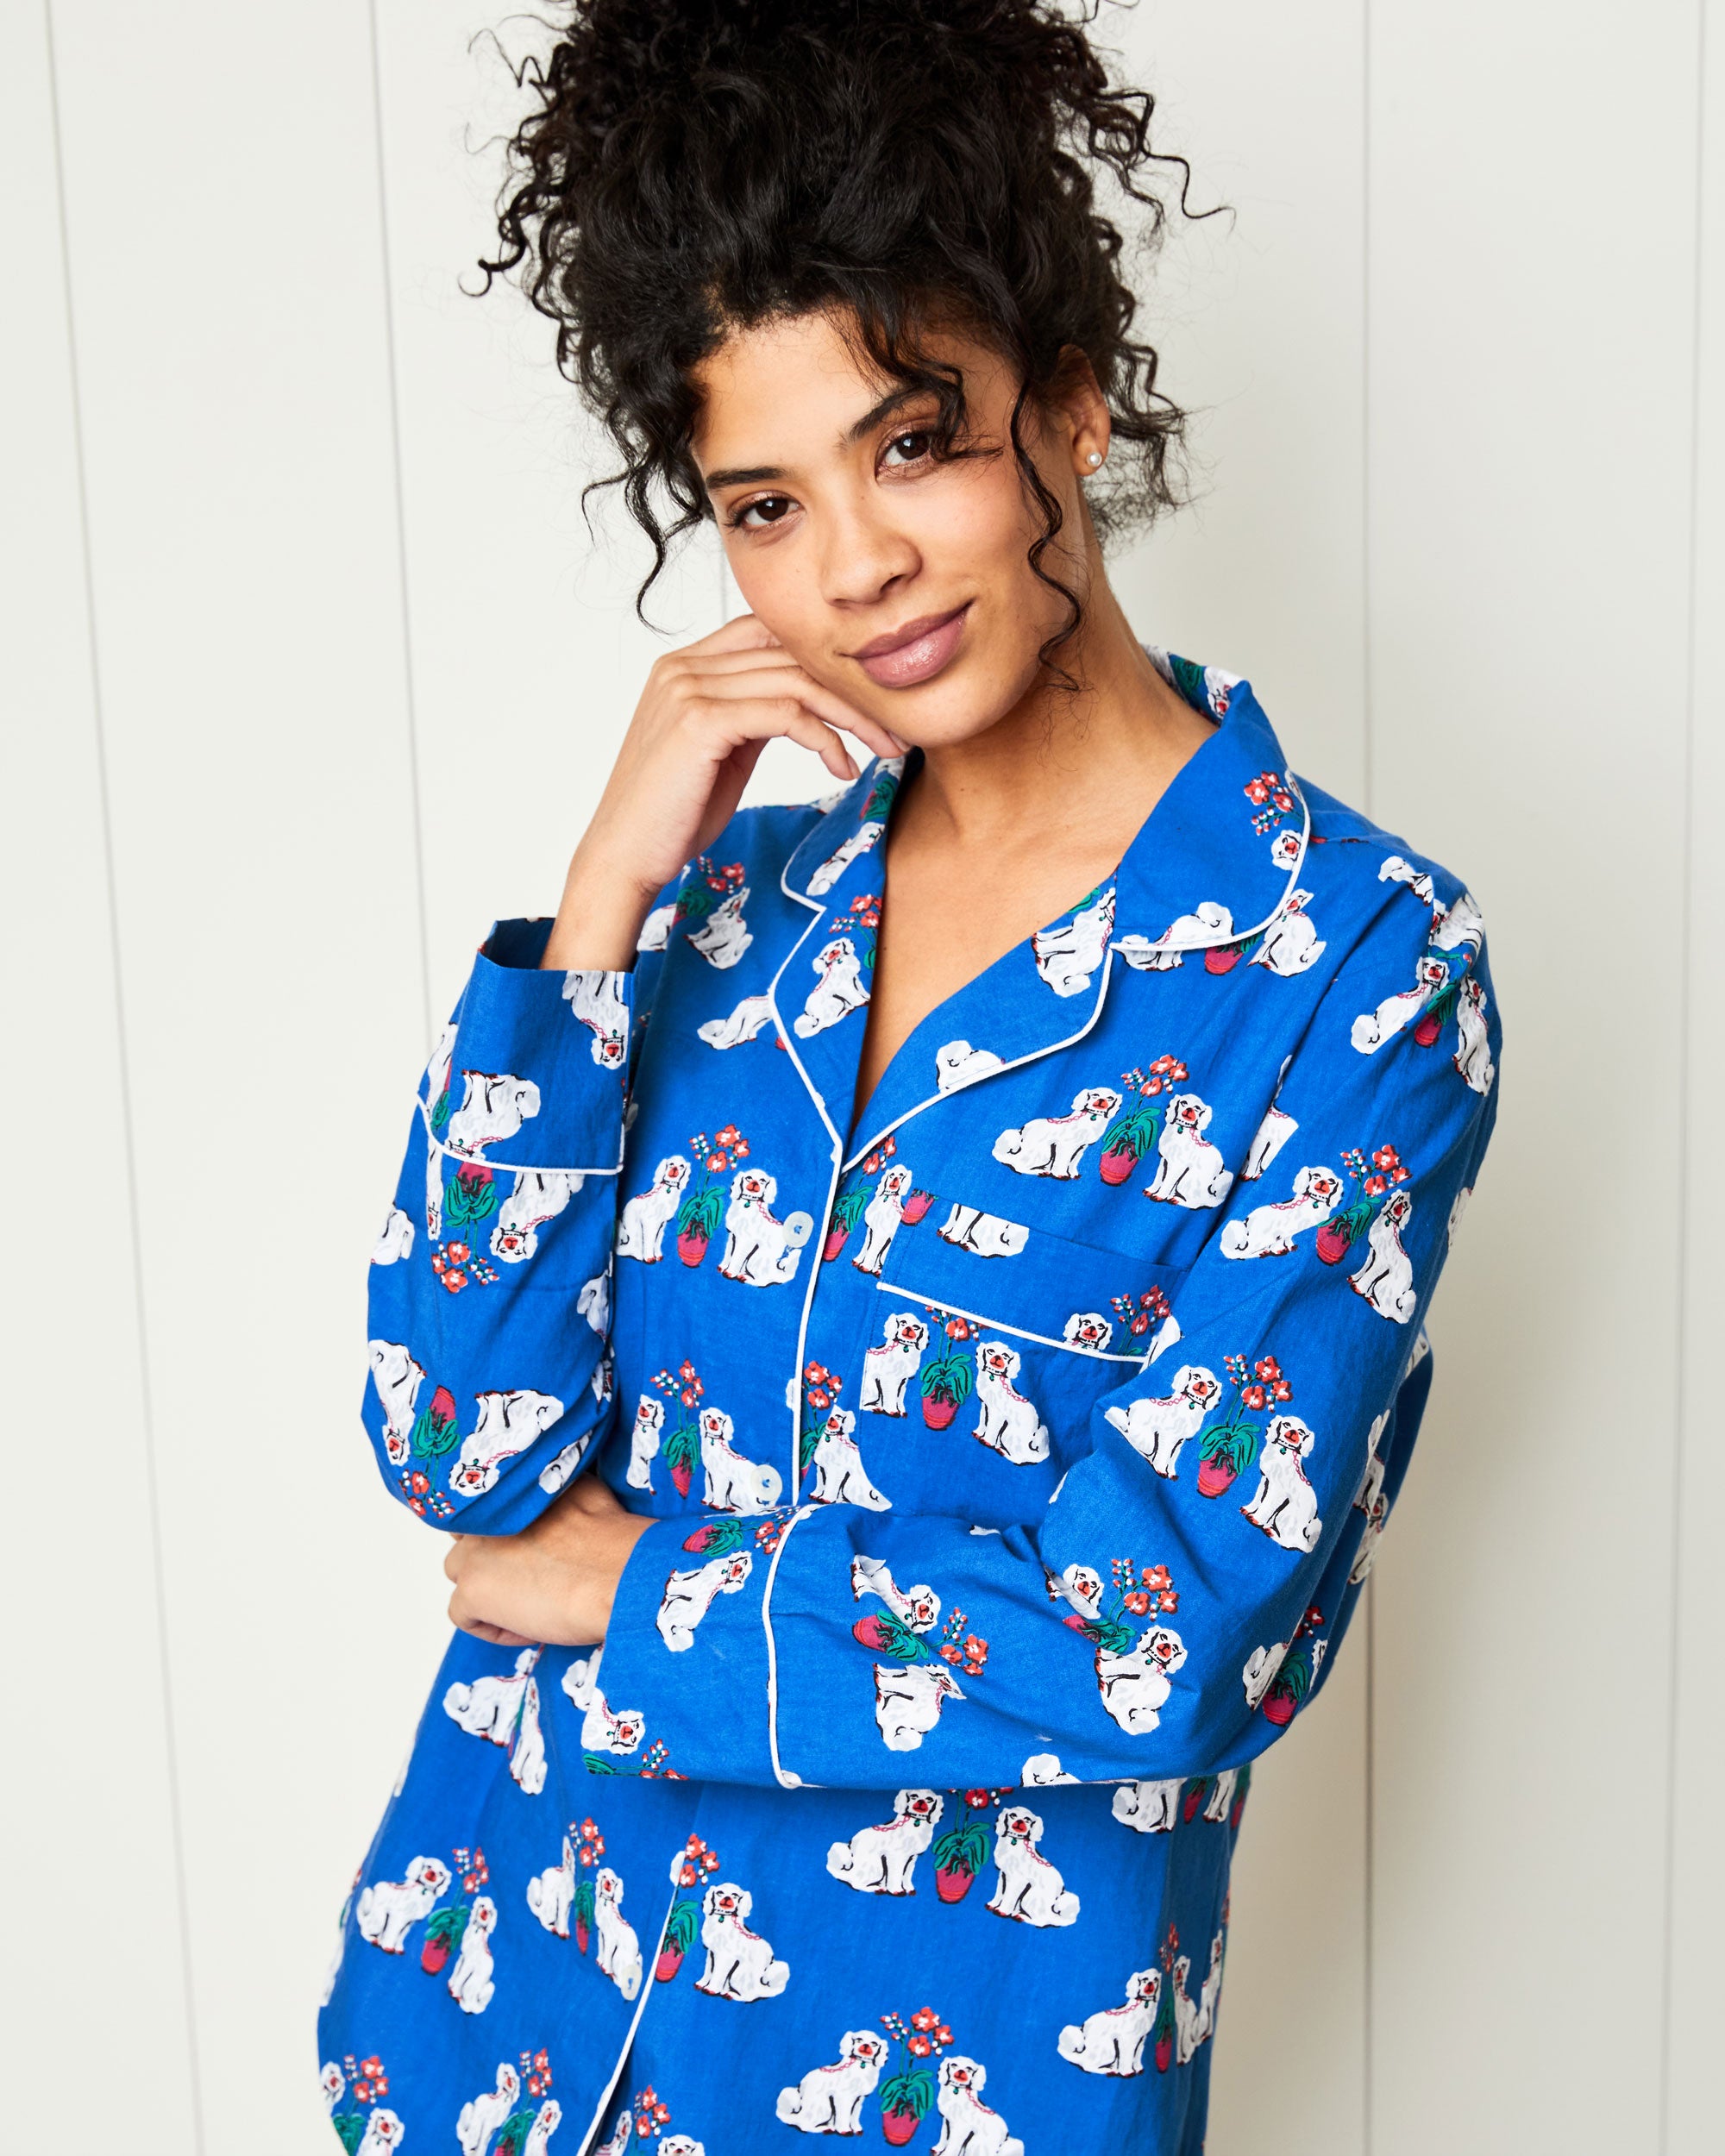 Nite Flite - Saturday fashion: the pyjama look😎 Stay in, stay